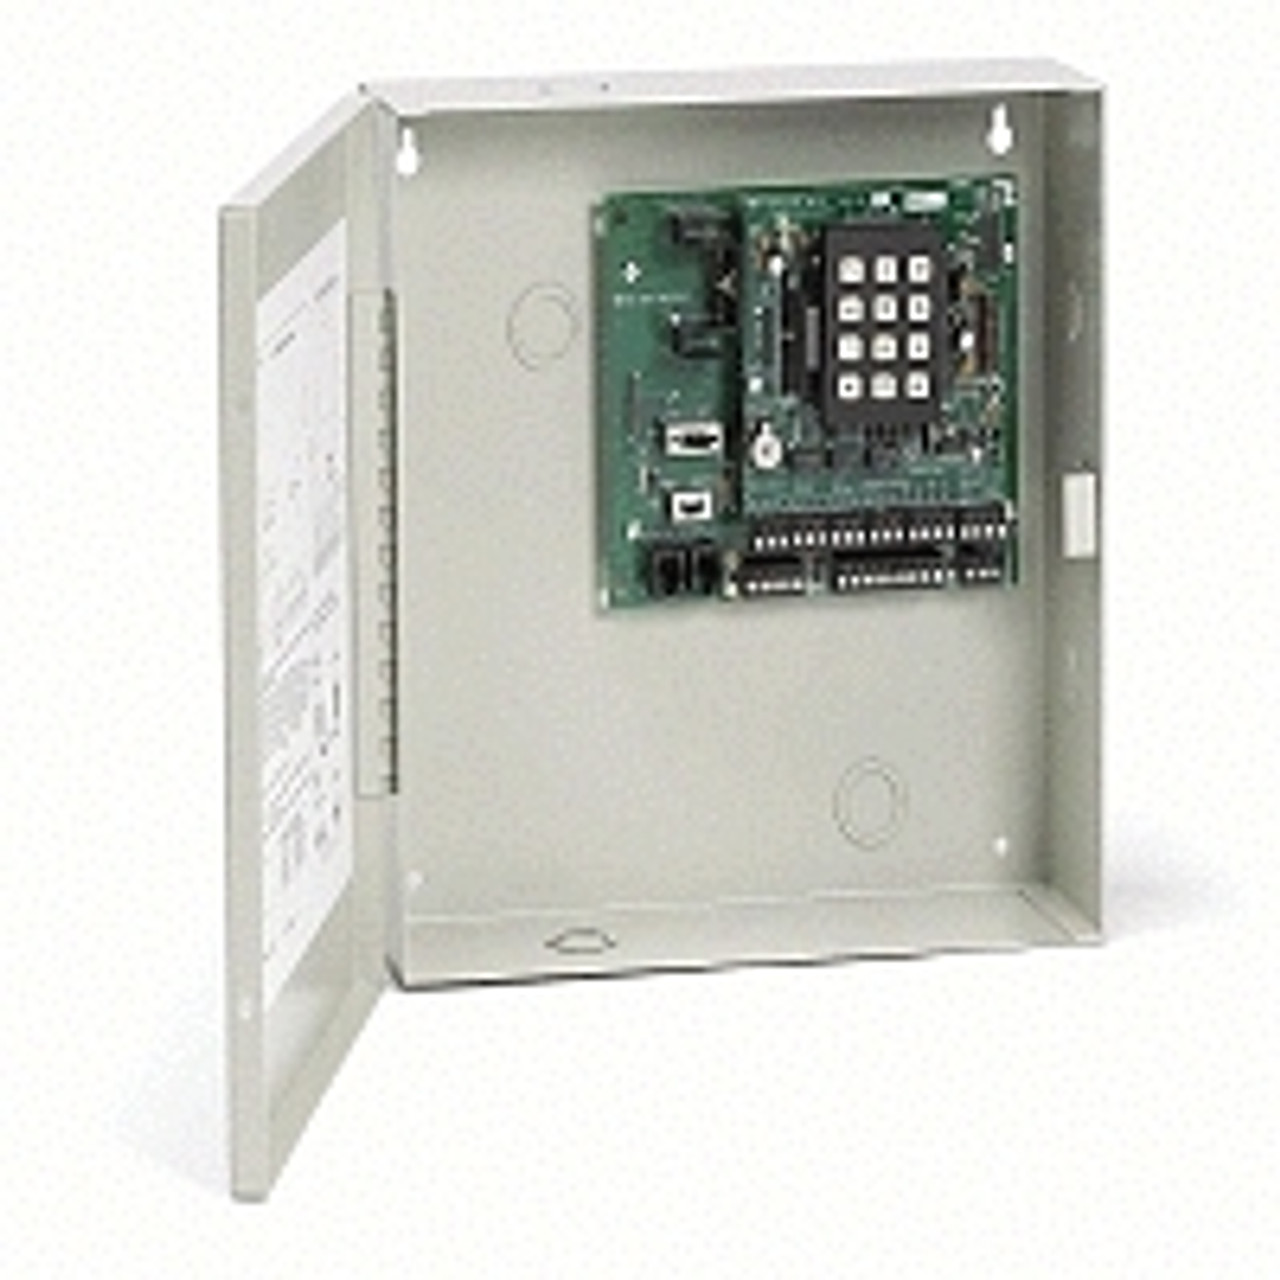 MiniMax-3 IEI Single Door Access Control Panel